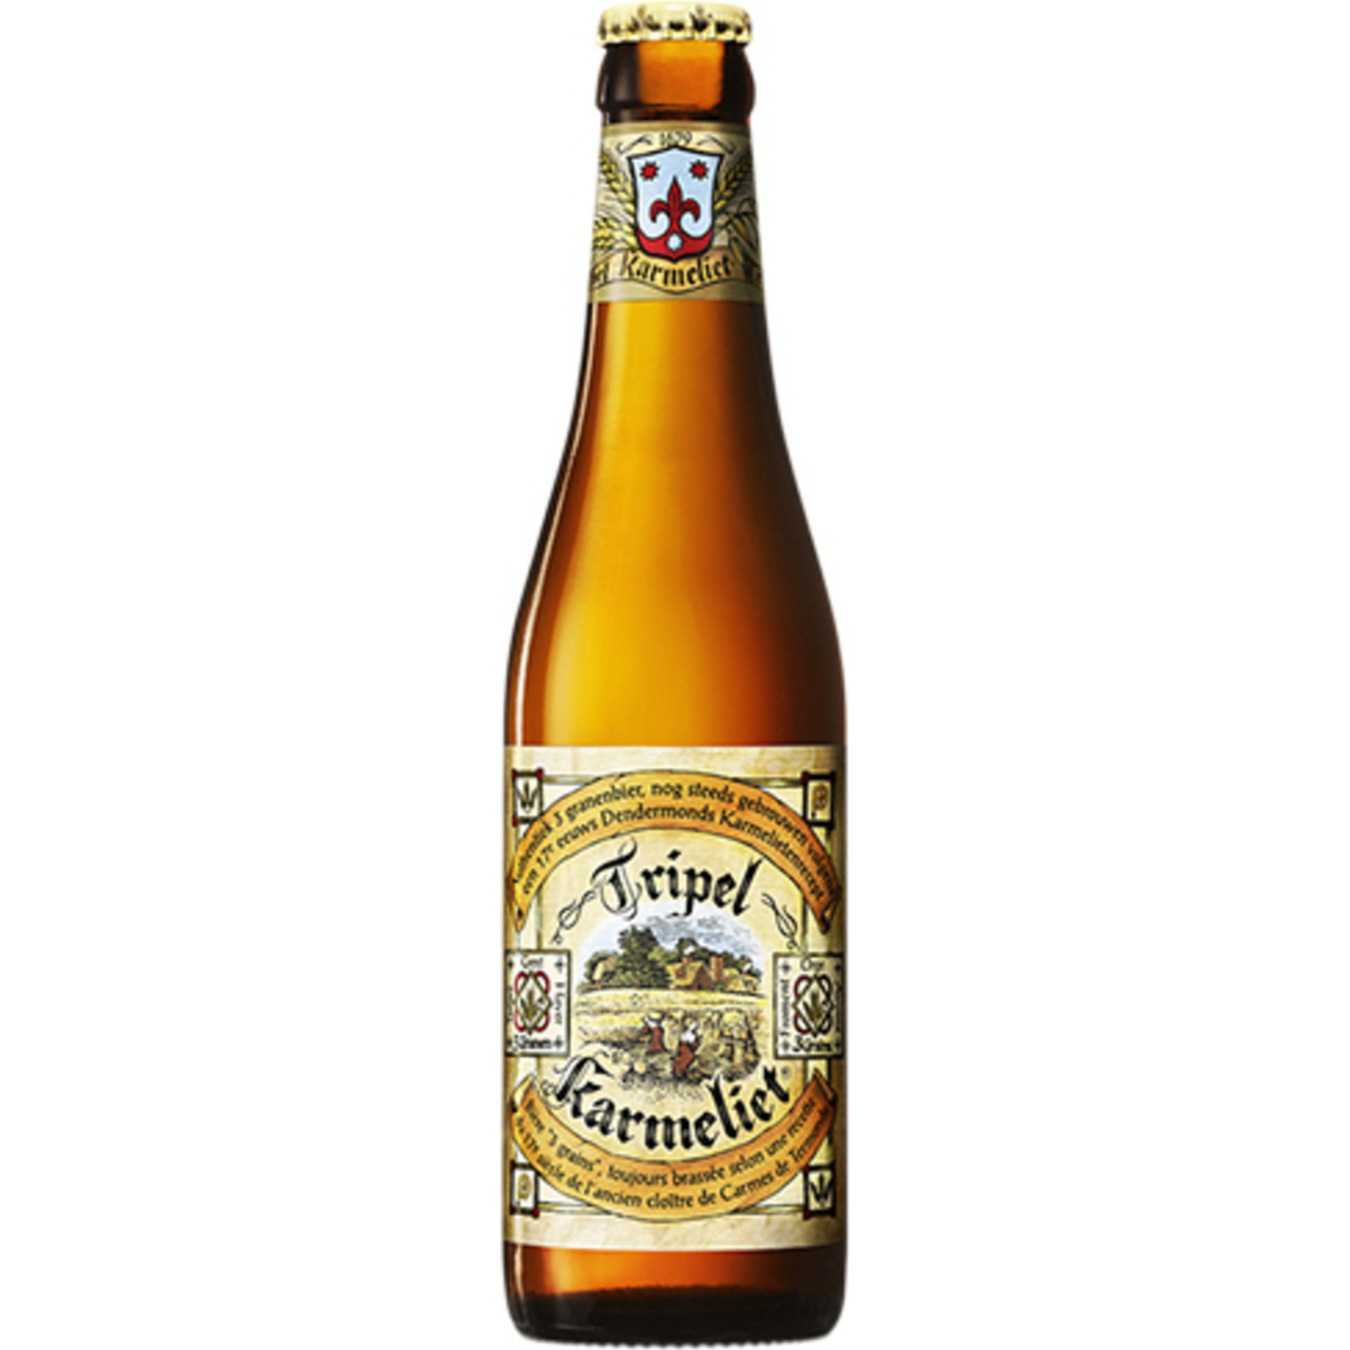 Tripel Karmeliet light beer 8,4% 0,33l glass